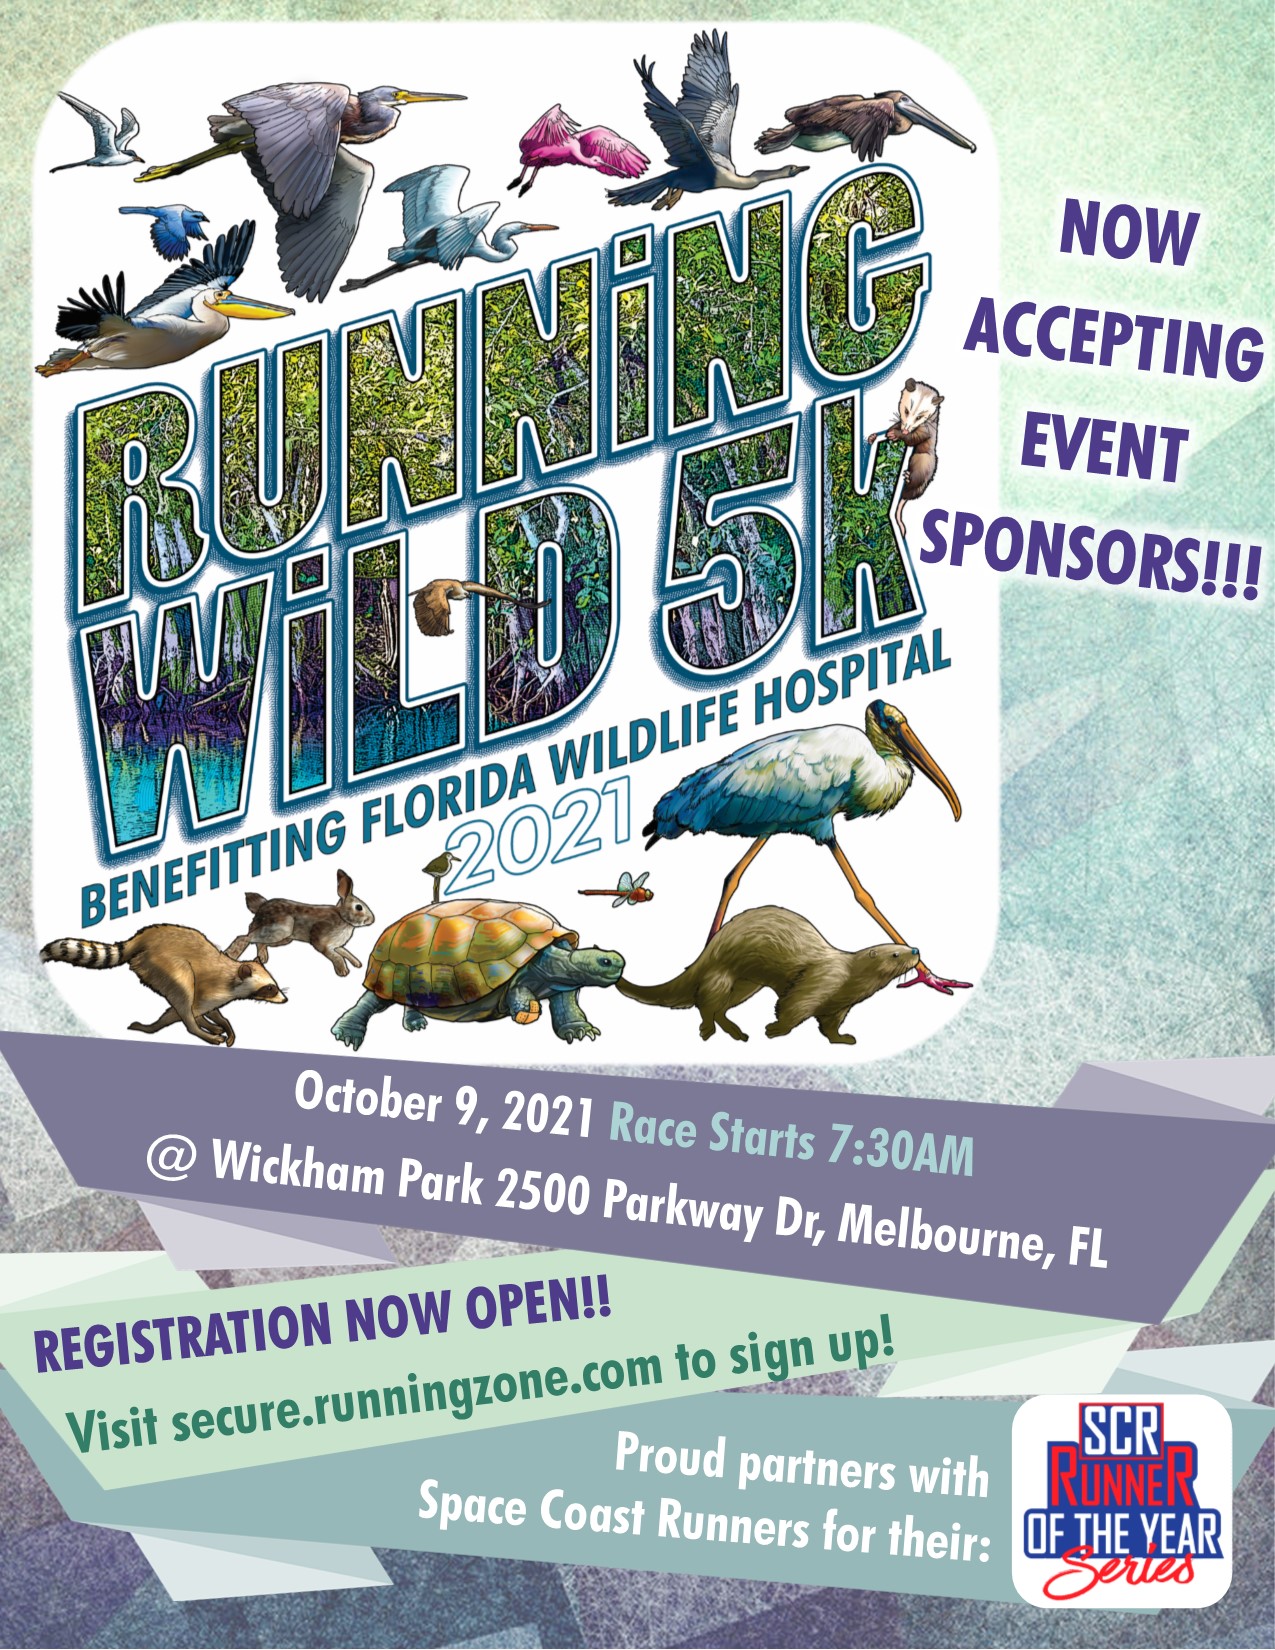 Running Wild 5K Florida Wildlife Hospital